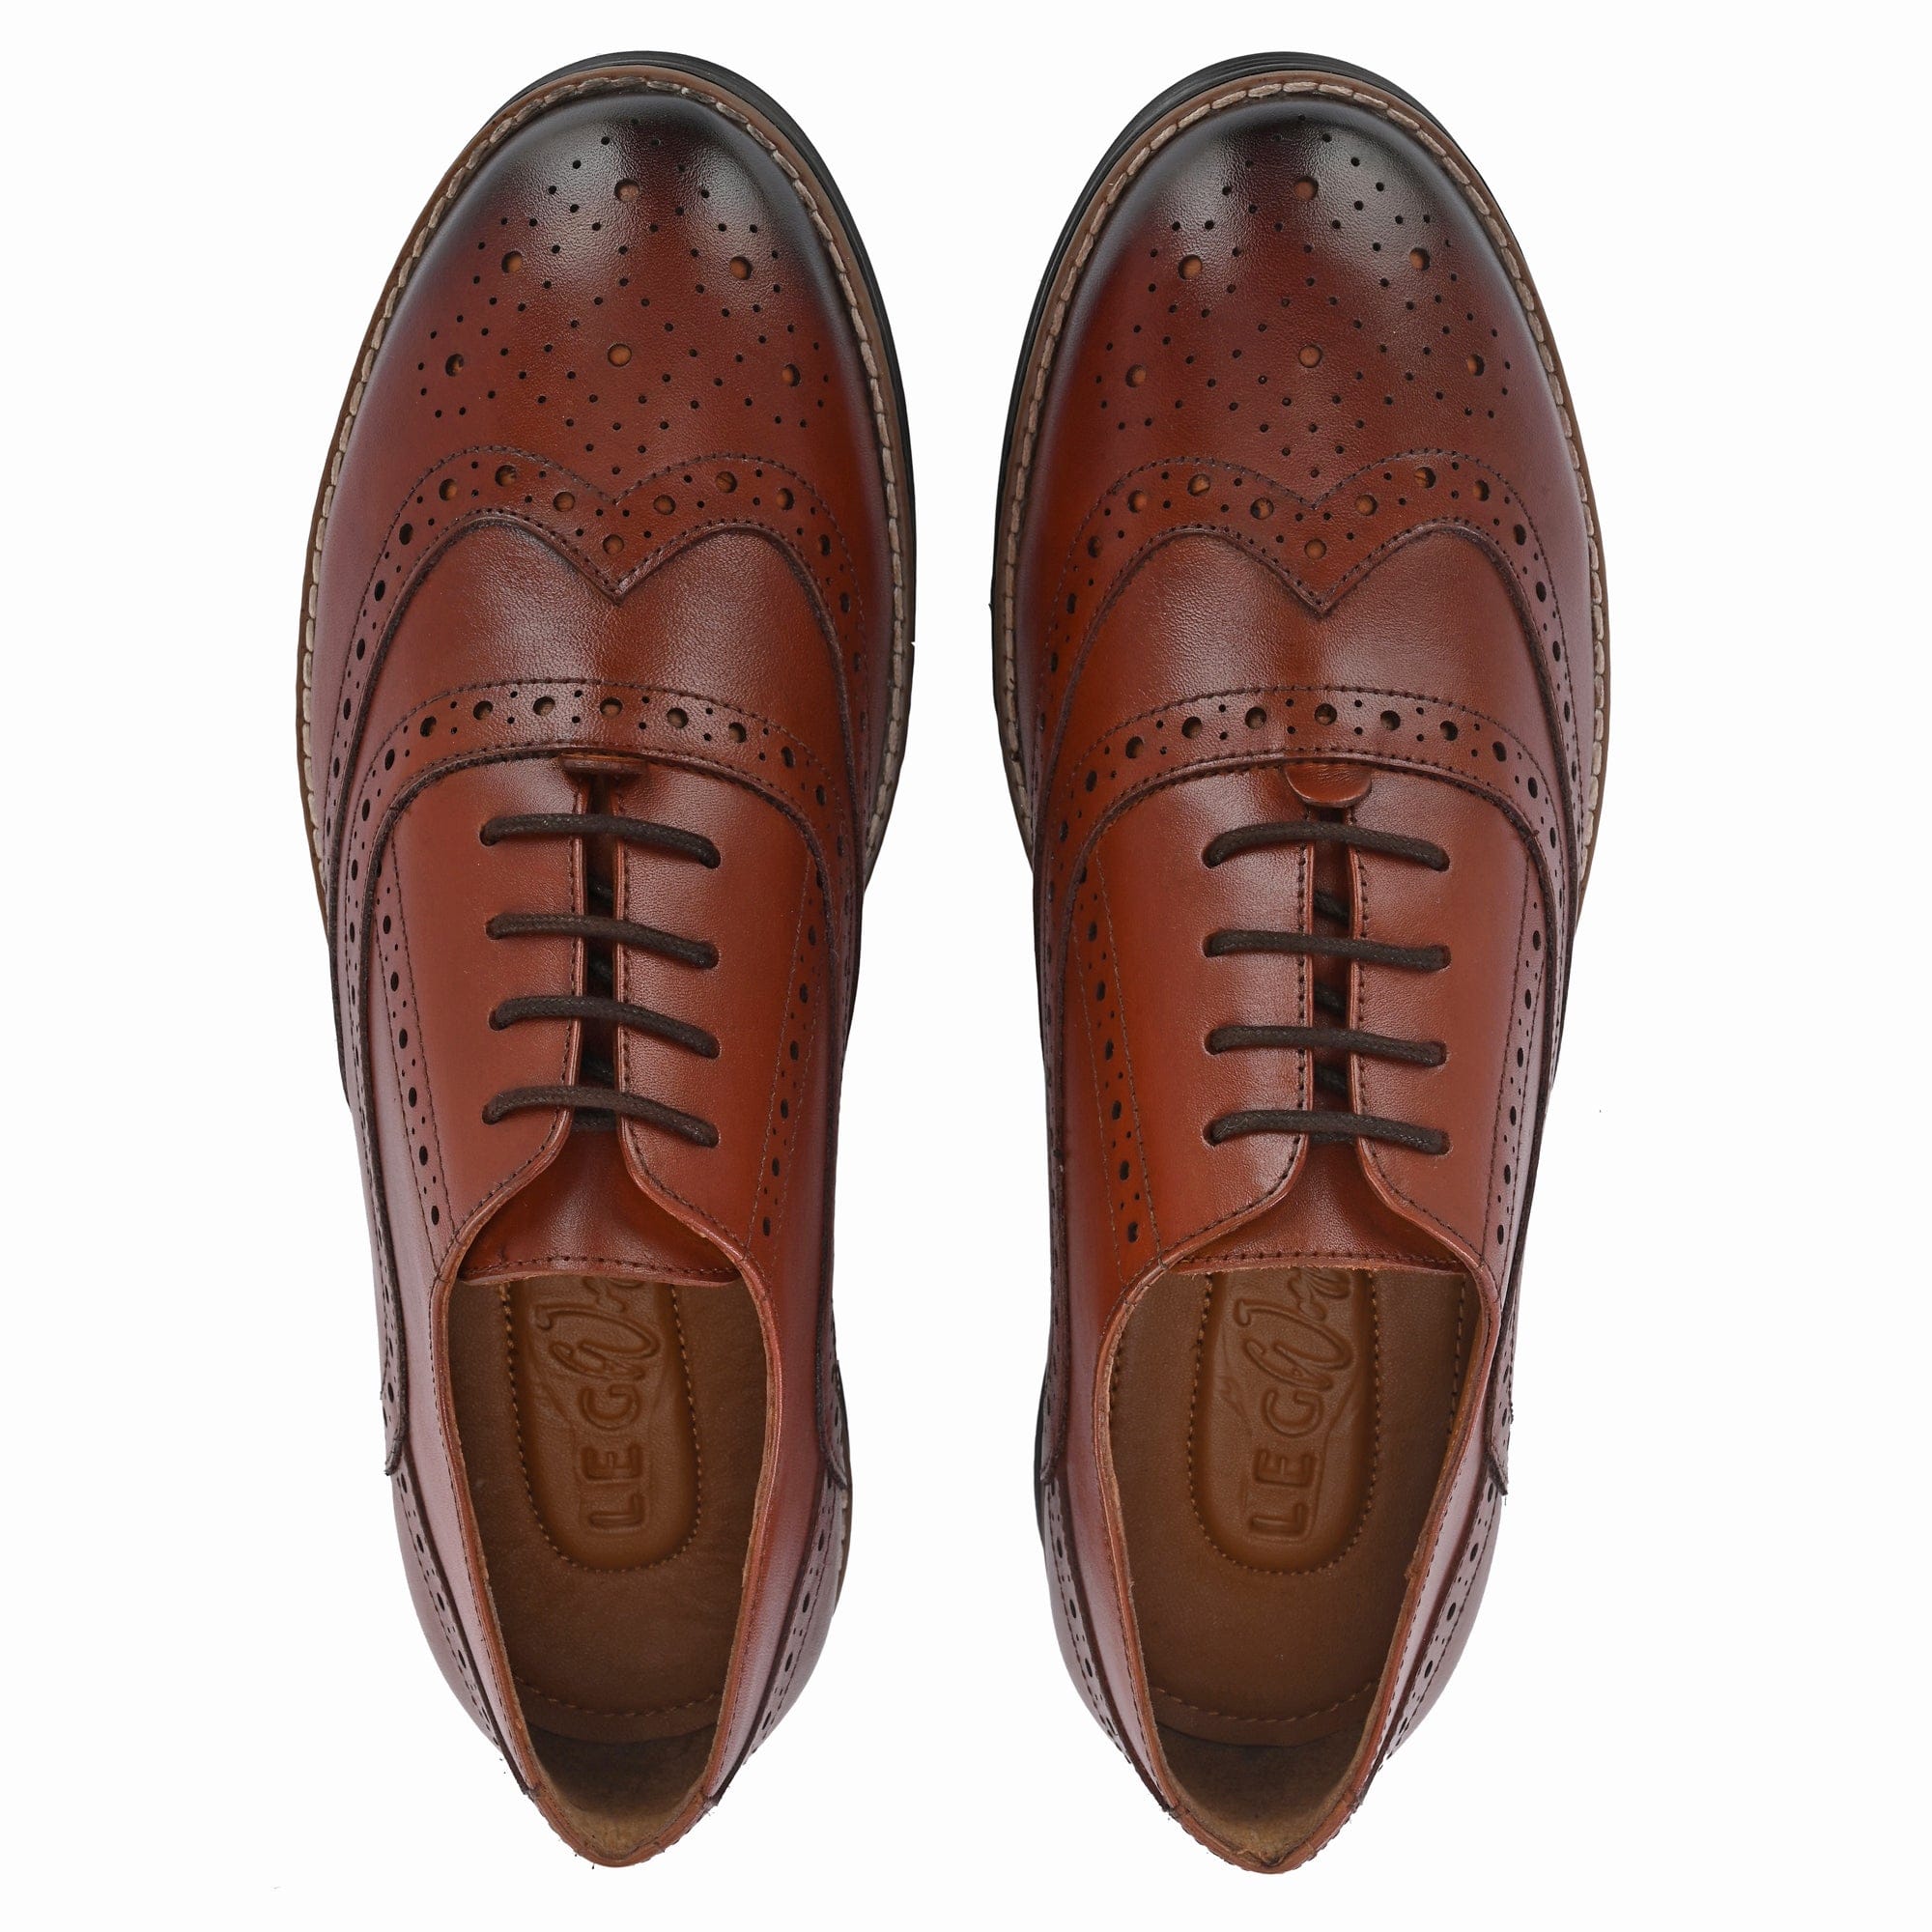 Legwork Laser Brogue Oxford 2.0 Tan Italian Leather Shoes